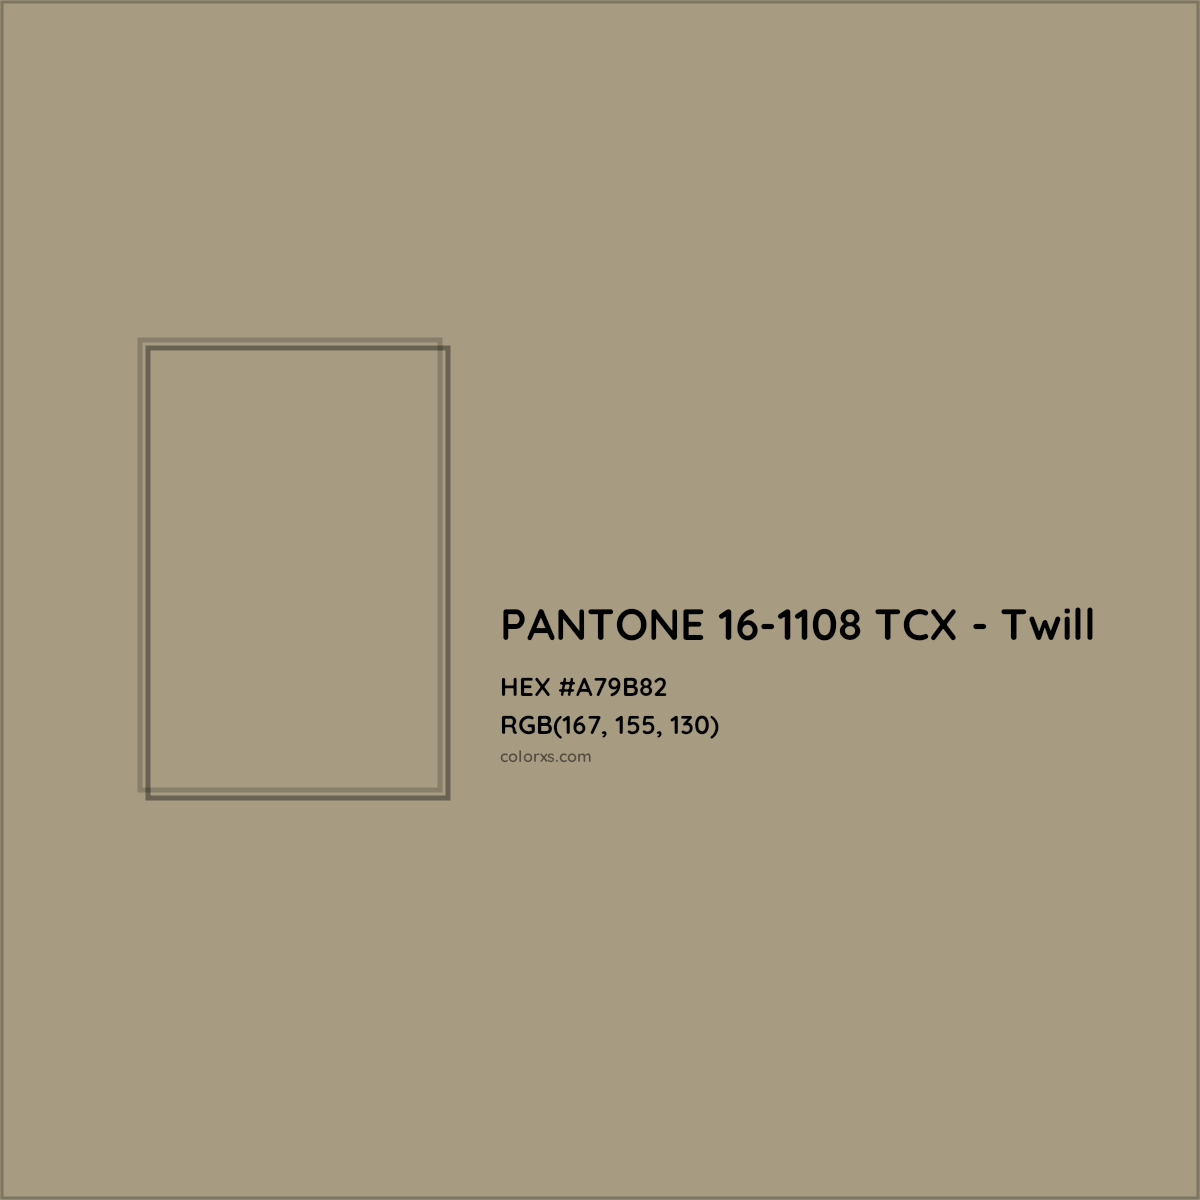 HEX #A79B82 PANTONE 16-1108 TCX - Twill CMS Pantone TCX - Color Code